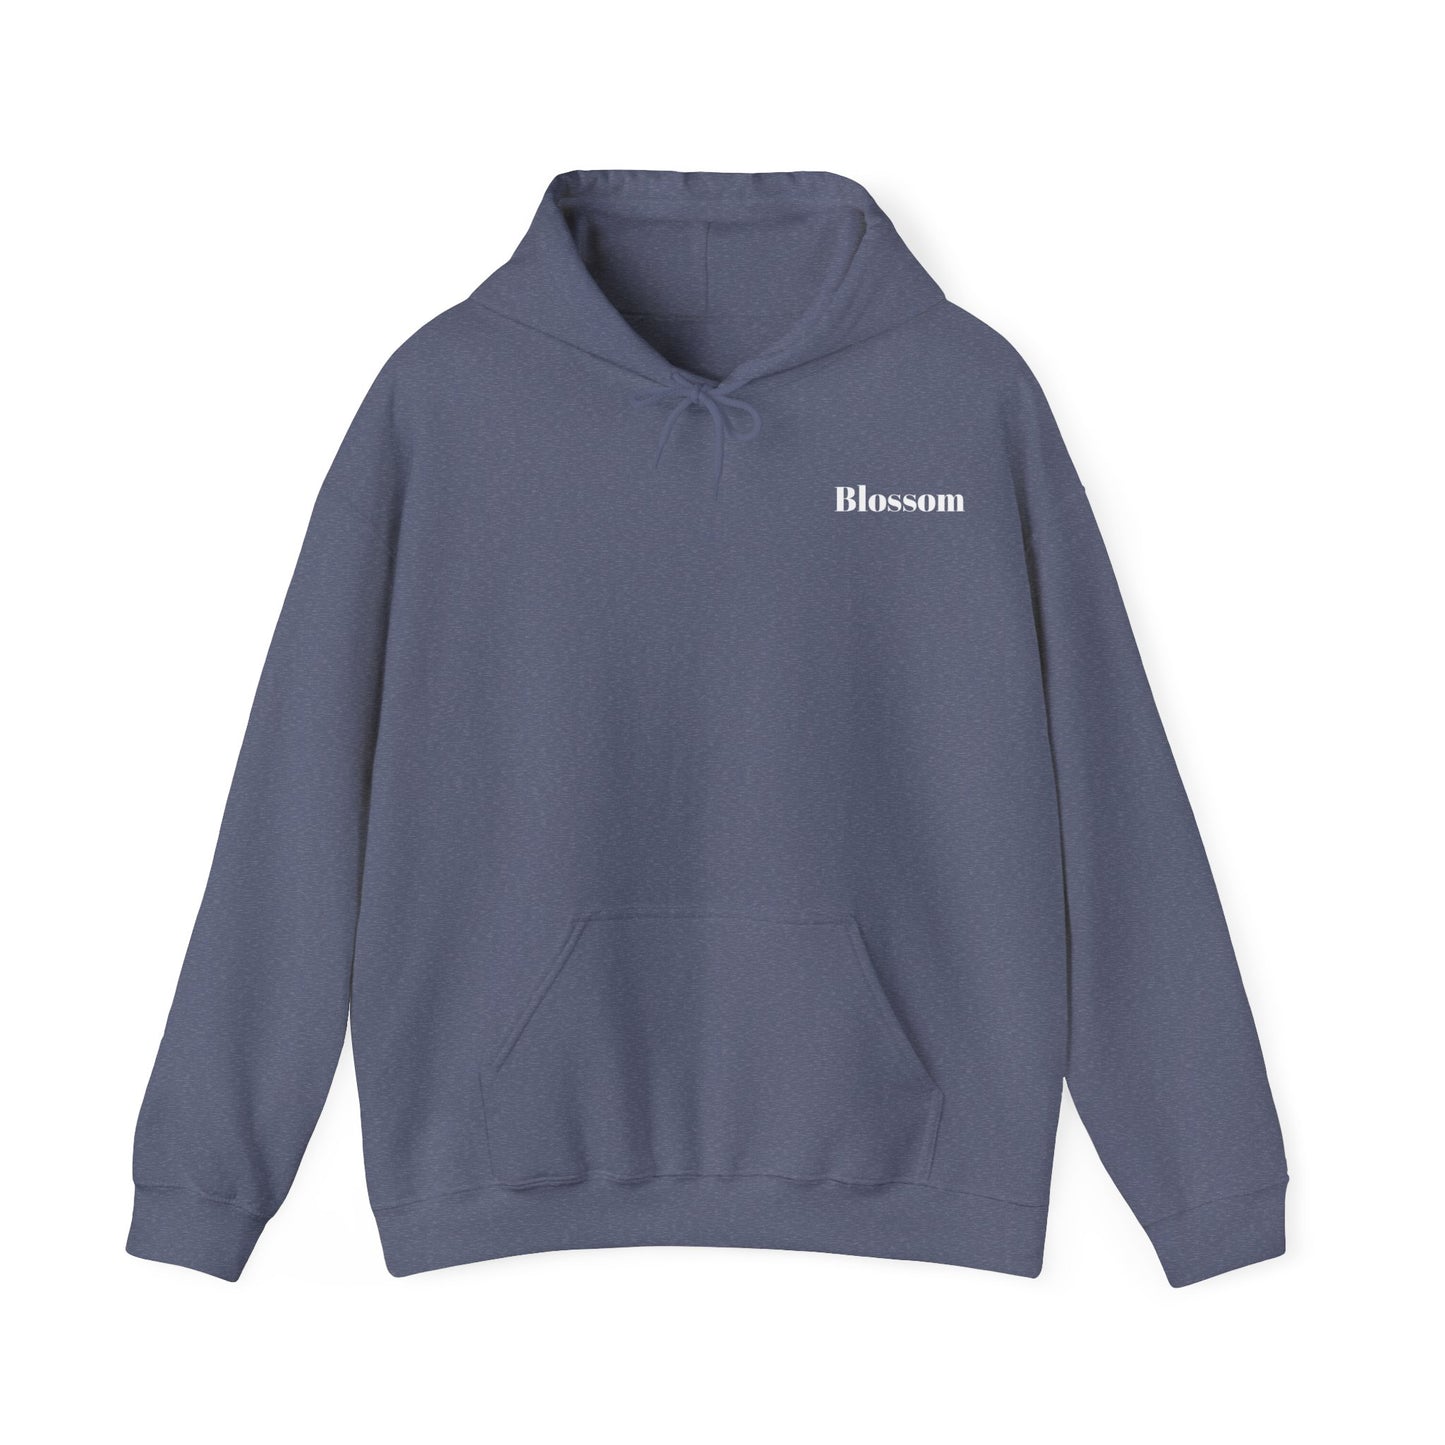 Blossom Unisex Hooded Sweatshirt with Heavy Blend Fabric12